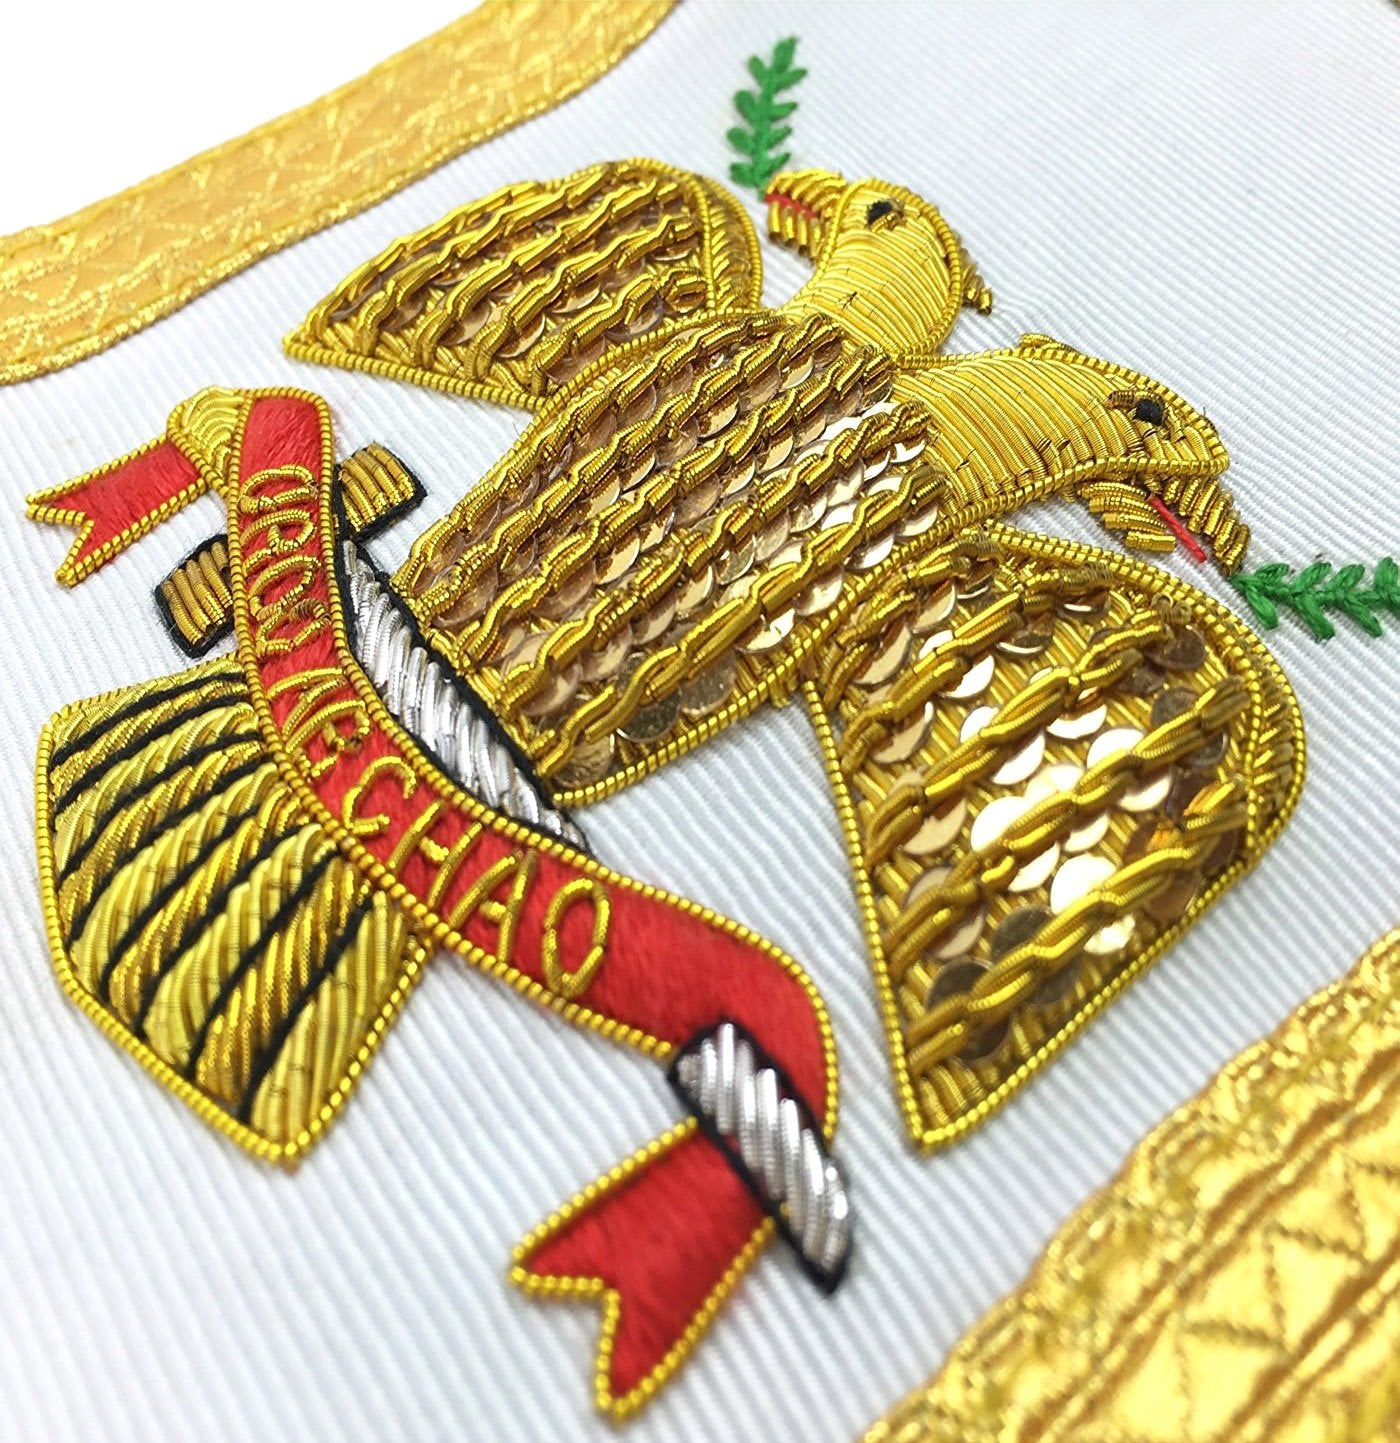 33rd Degree Sash - Gold Fringe & Hand Embroidery - Bricks Masons